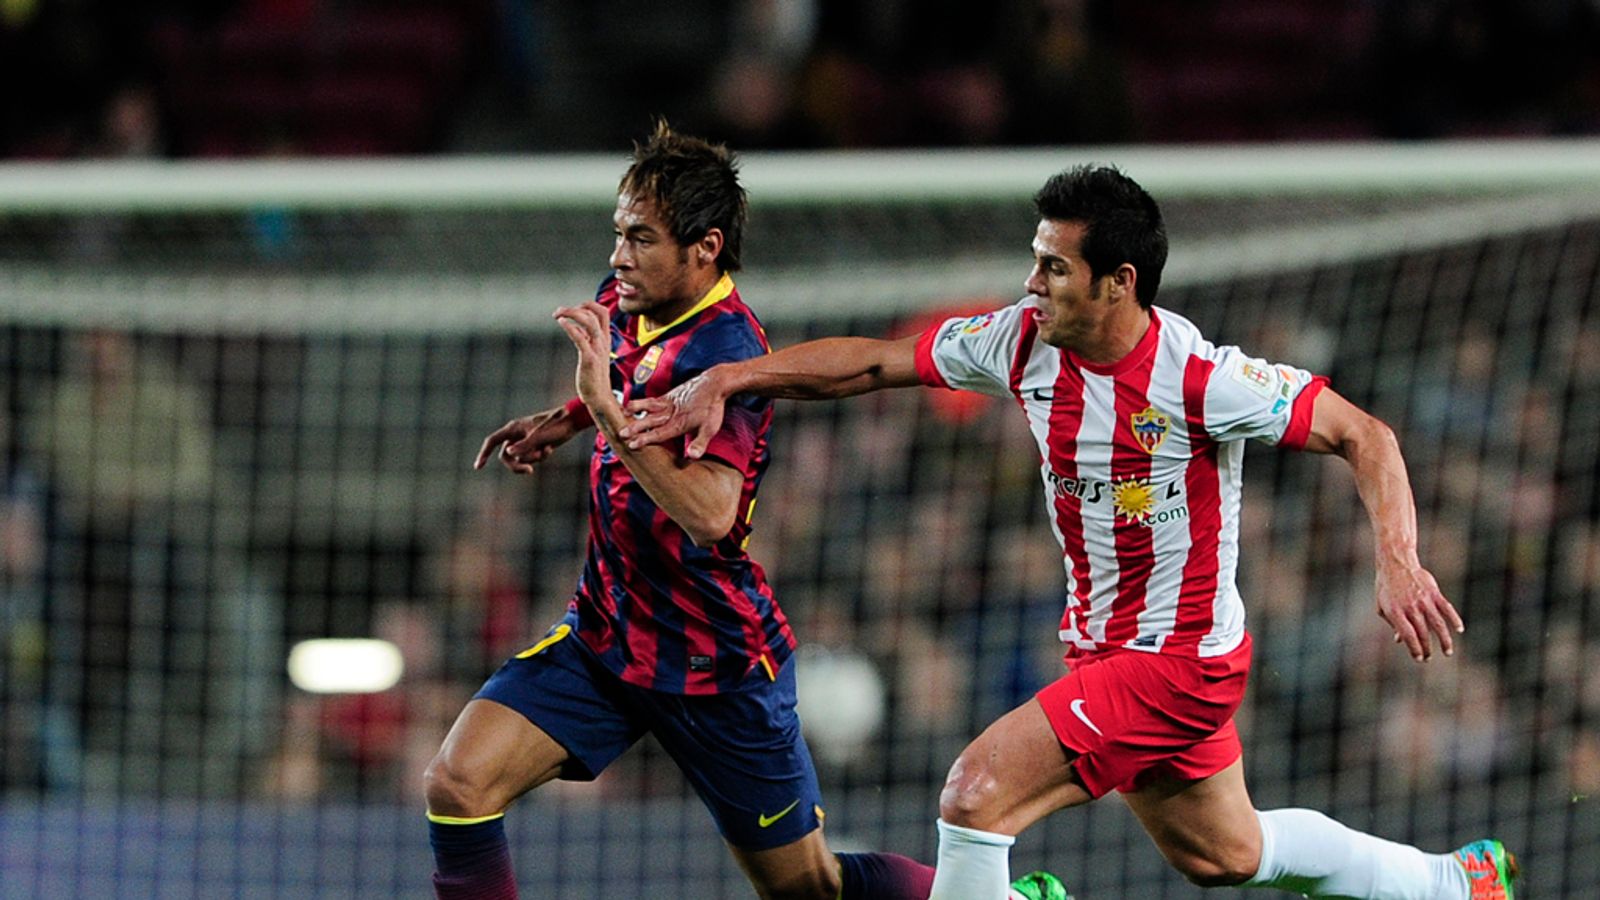 Barcelona 4 - 1 Almeria - Match Report & Highlights